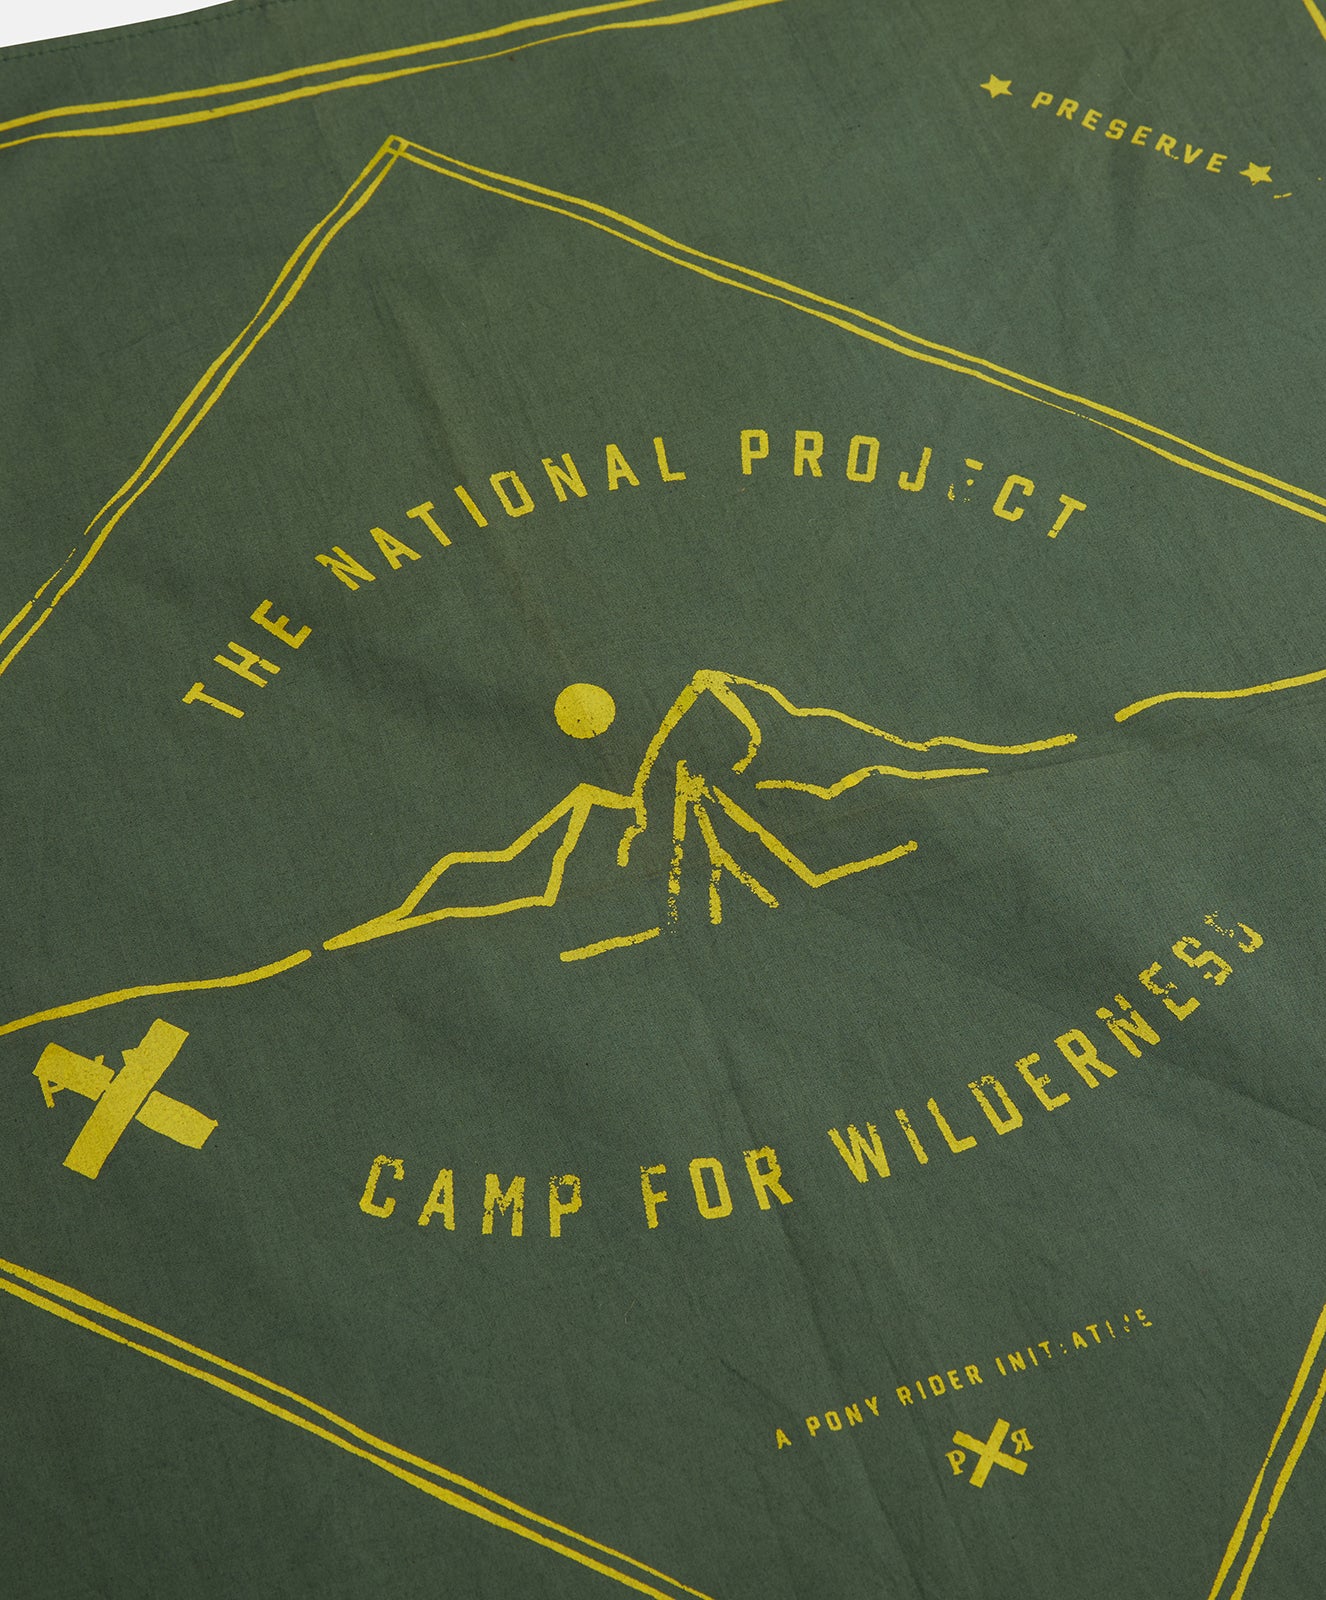 Camp for Wilderness Bandana